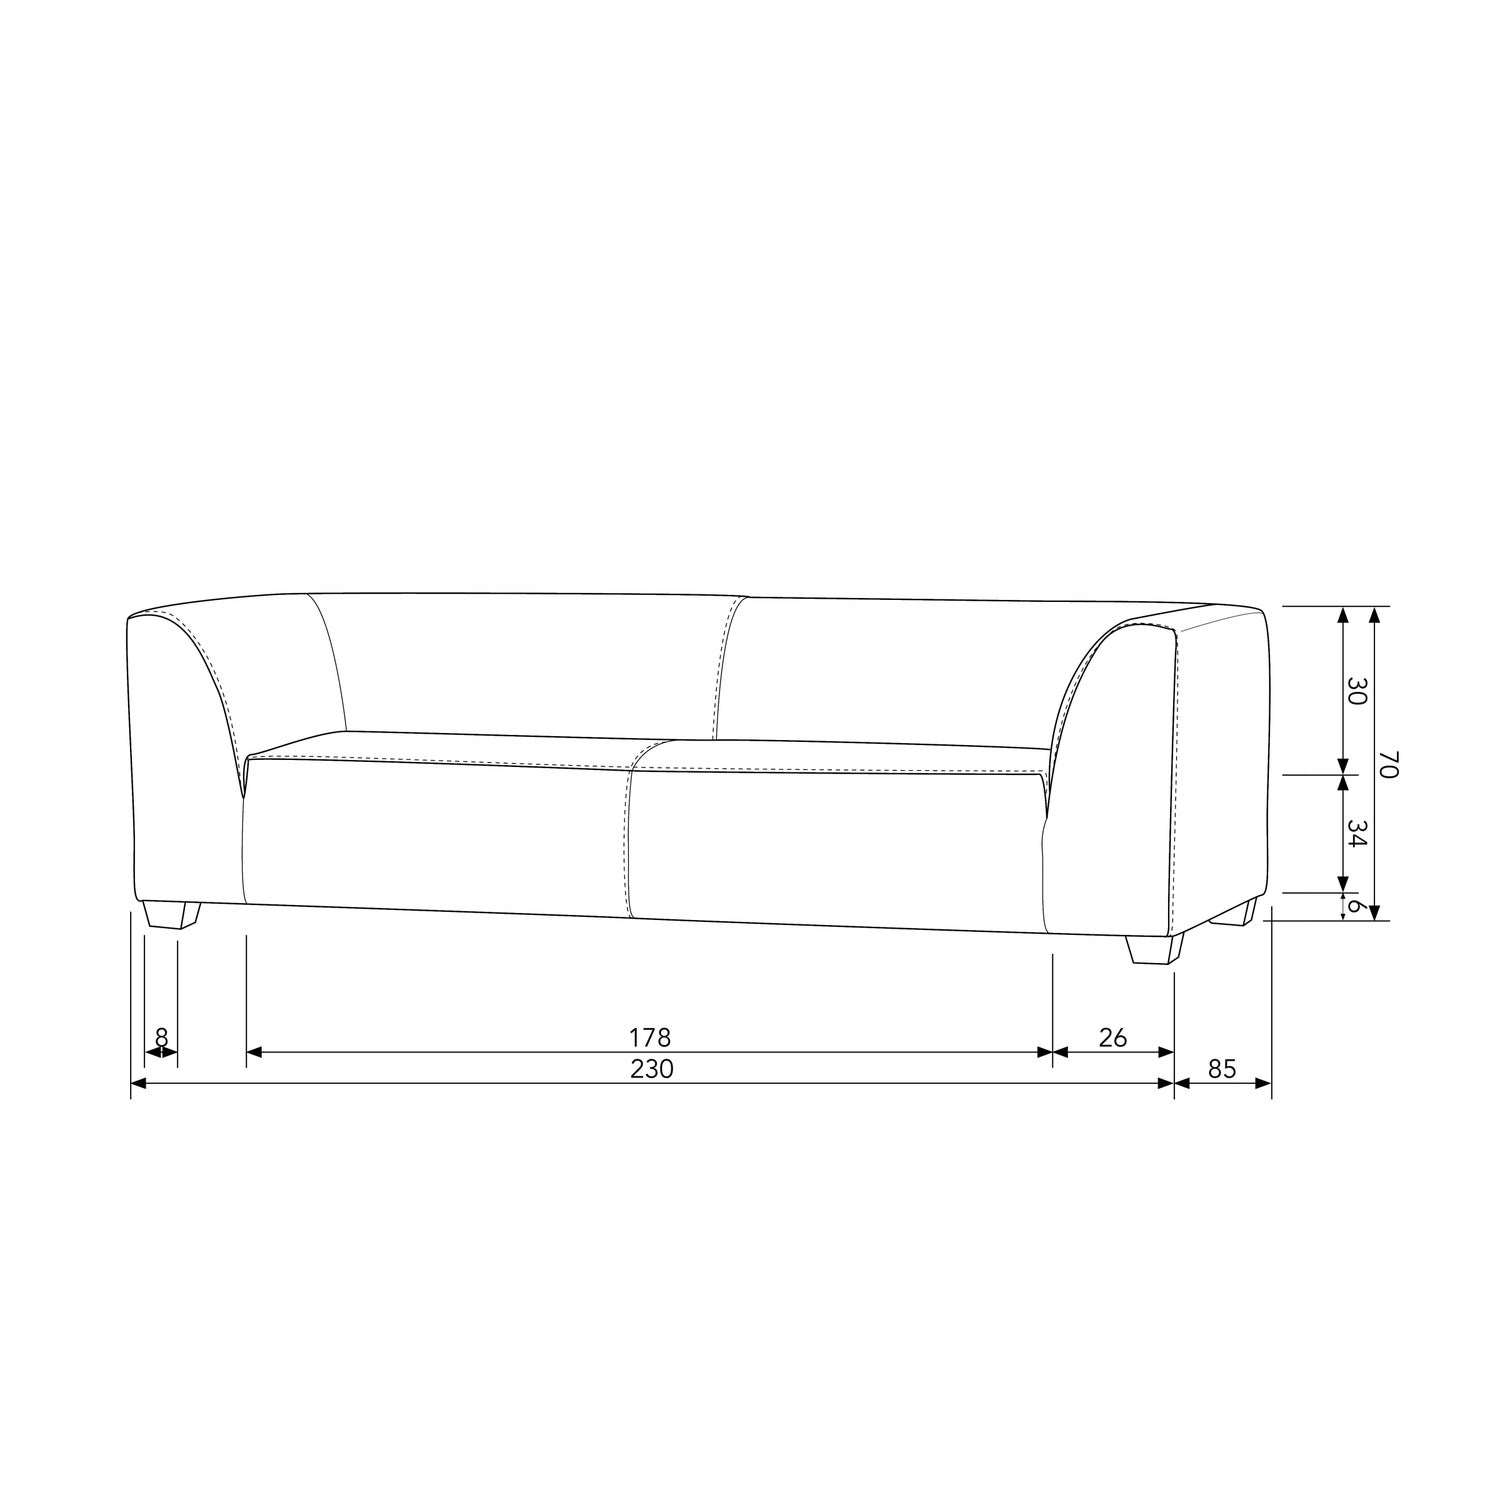 400432-G-400432-C-50_BT_Hollandia_3-seater_sofa.jpg?auto=webp&format=png&width=1500&height=1500